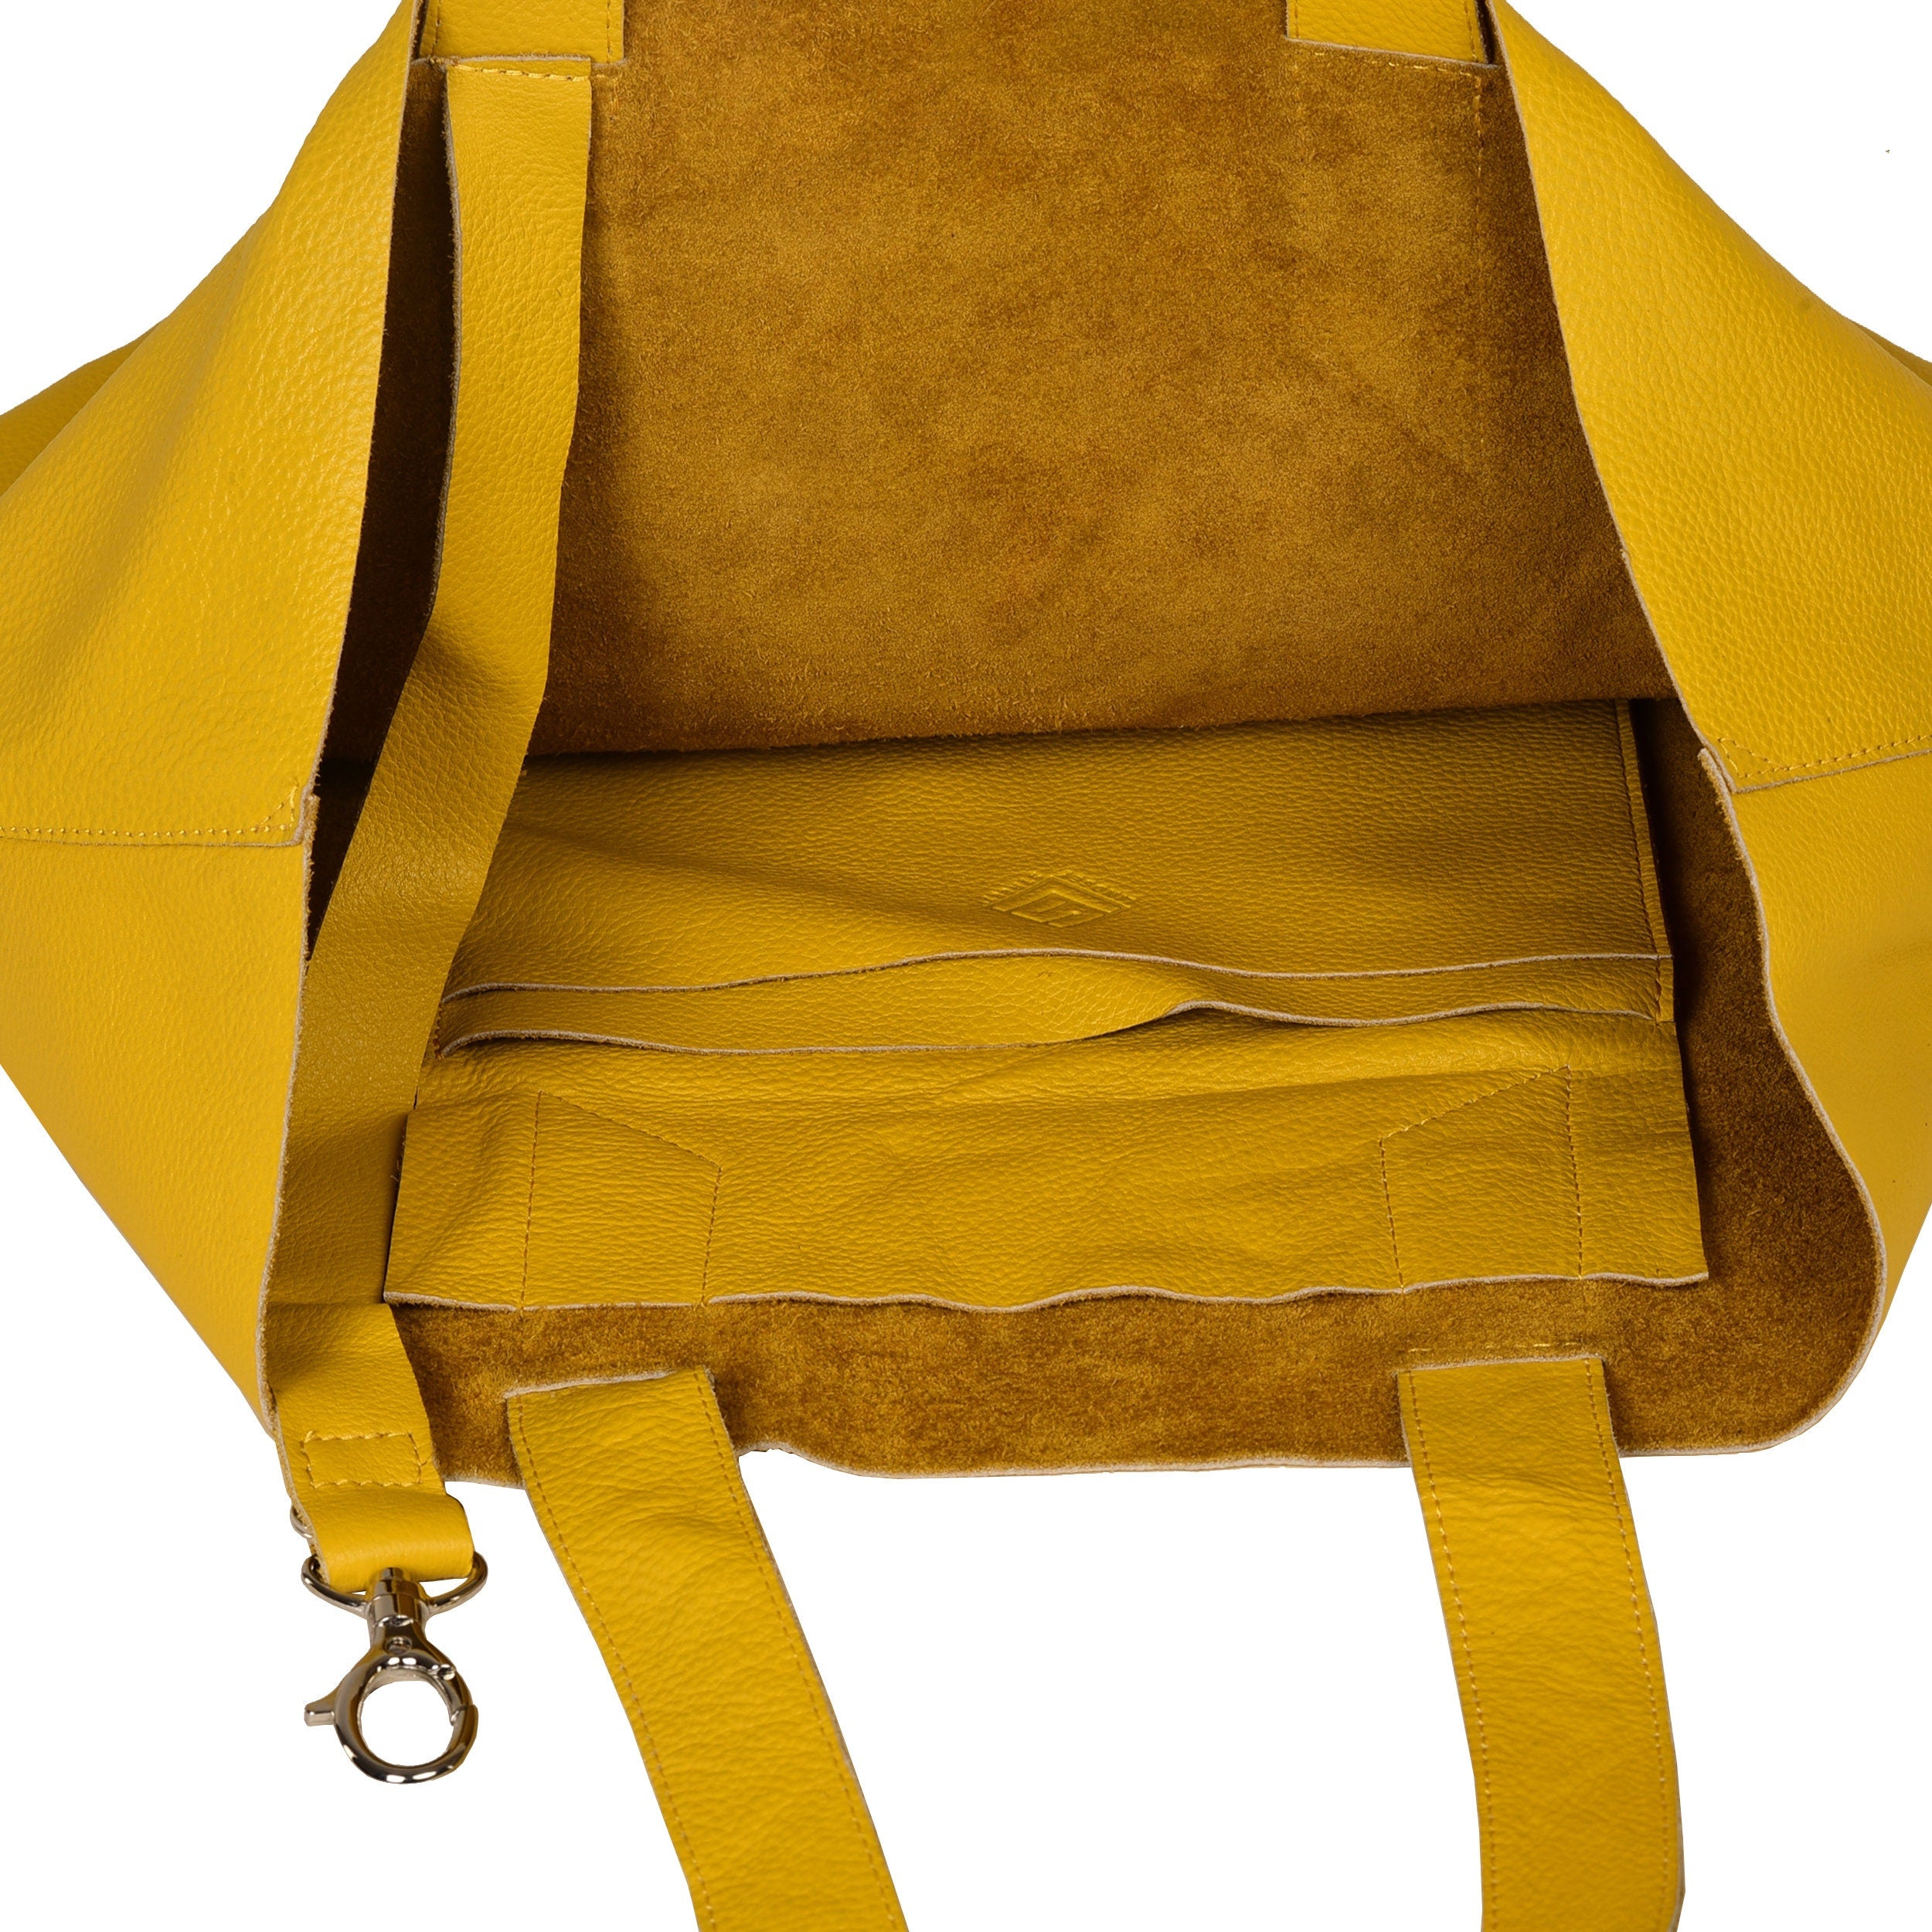 Buy WOZO WOZO Yellow Sunflower Black PU Leather Shoulder Tote Bag Purse for  Women Girls at Amazon.in